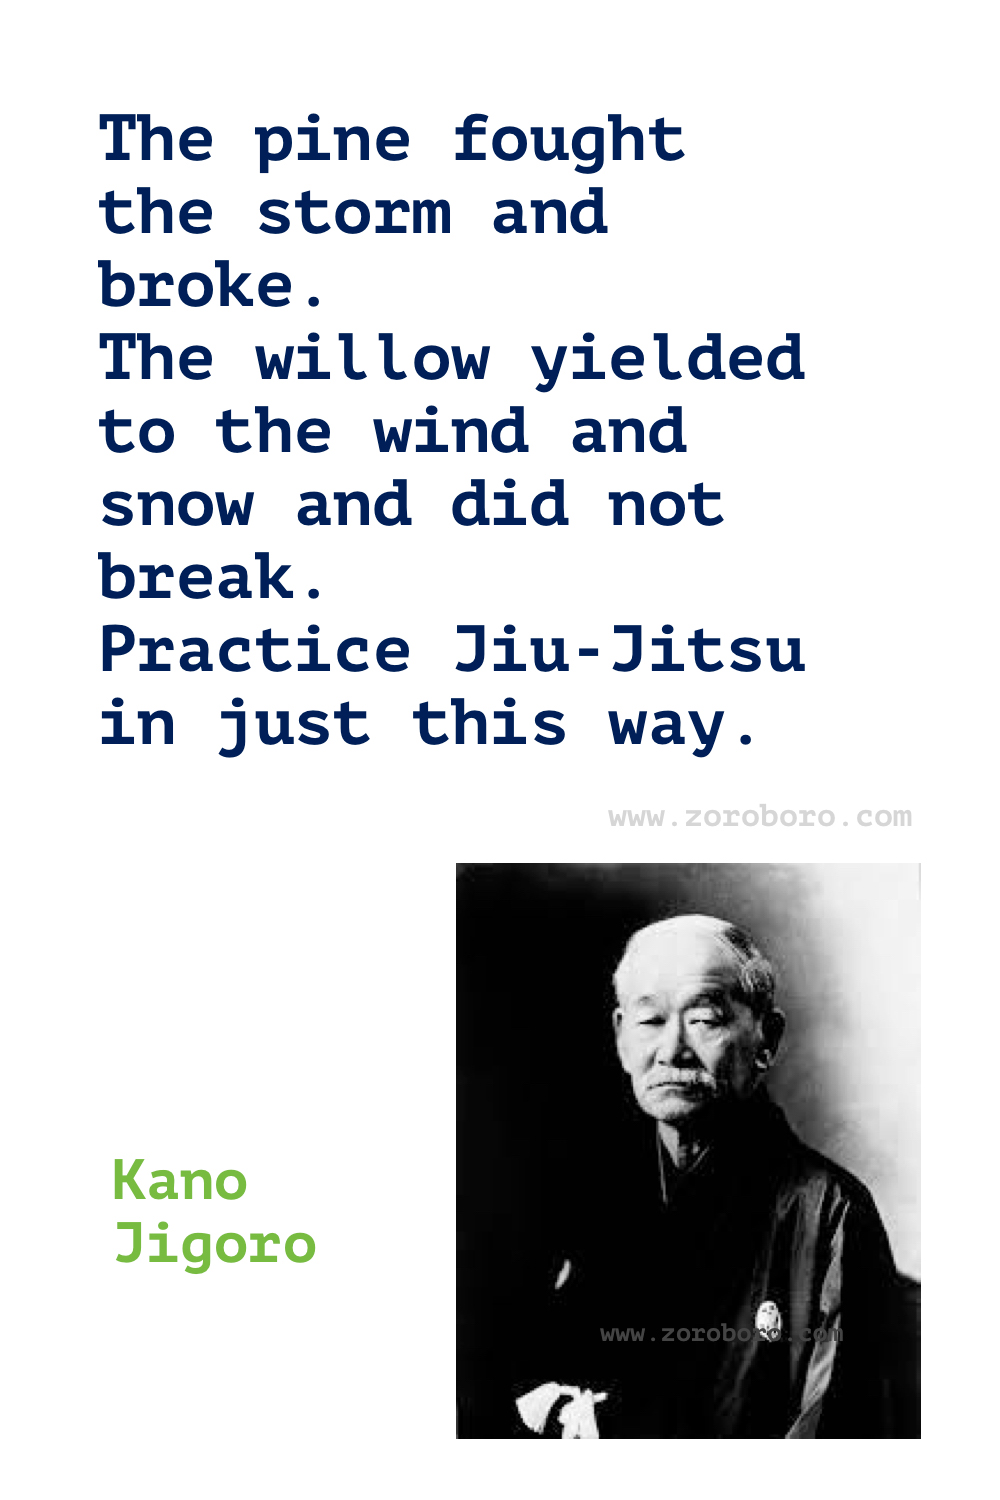 Kano Jigoro Quotes, Kano Jigoro Judo Quotes, Kano Jigoro Teaching, Kano Jigoro Jiu-Jitsu Quotes, Kano Jigoro Quotes.